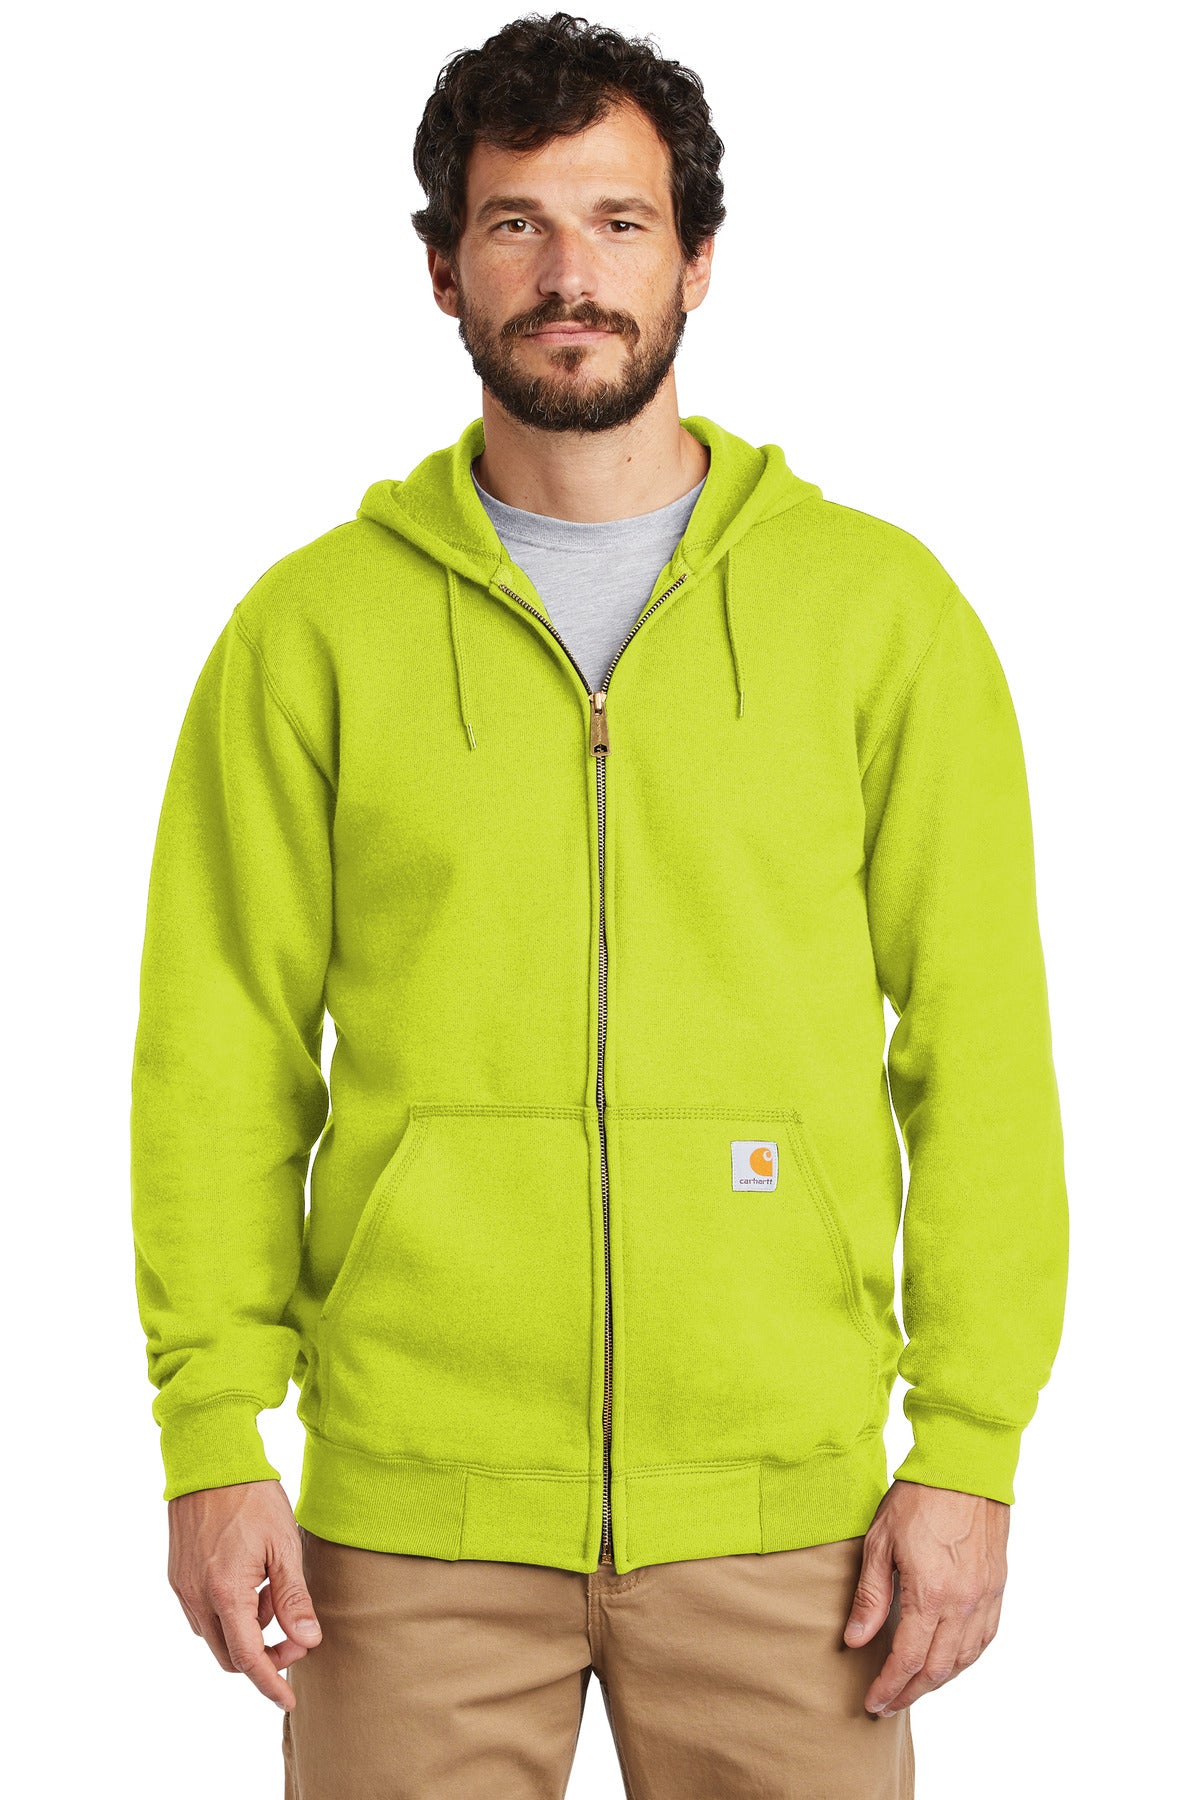 Photo of Carhartt Sweatshirts/Fleece CTK122  color  Brite Lime